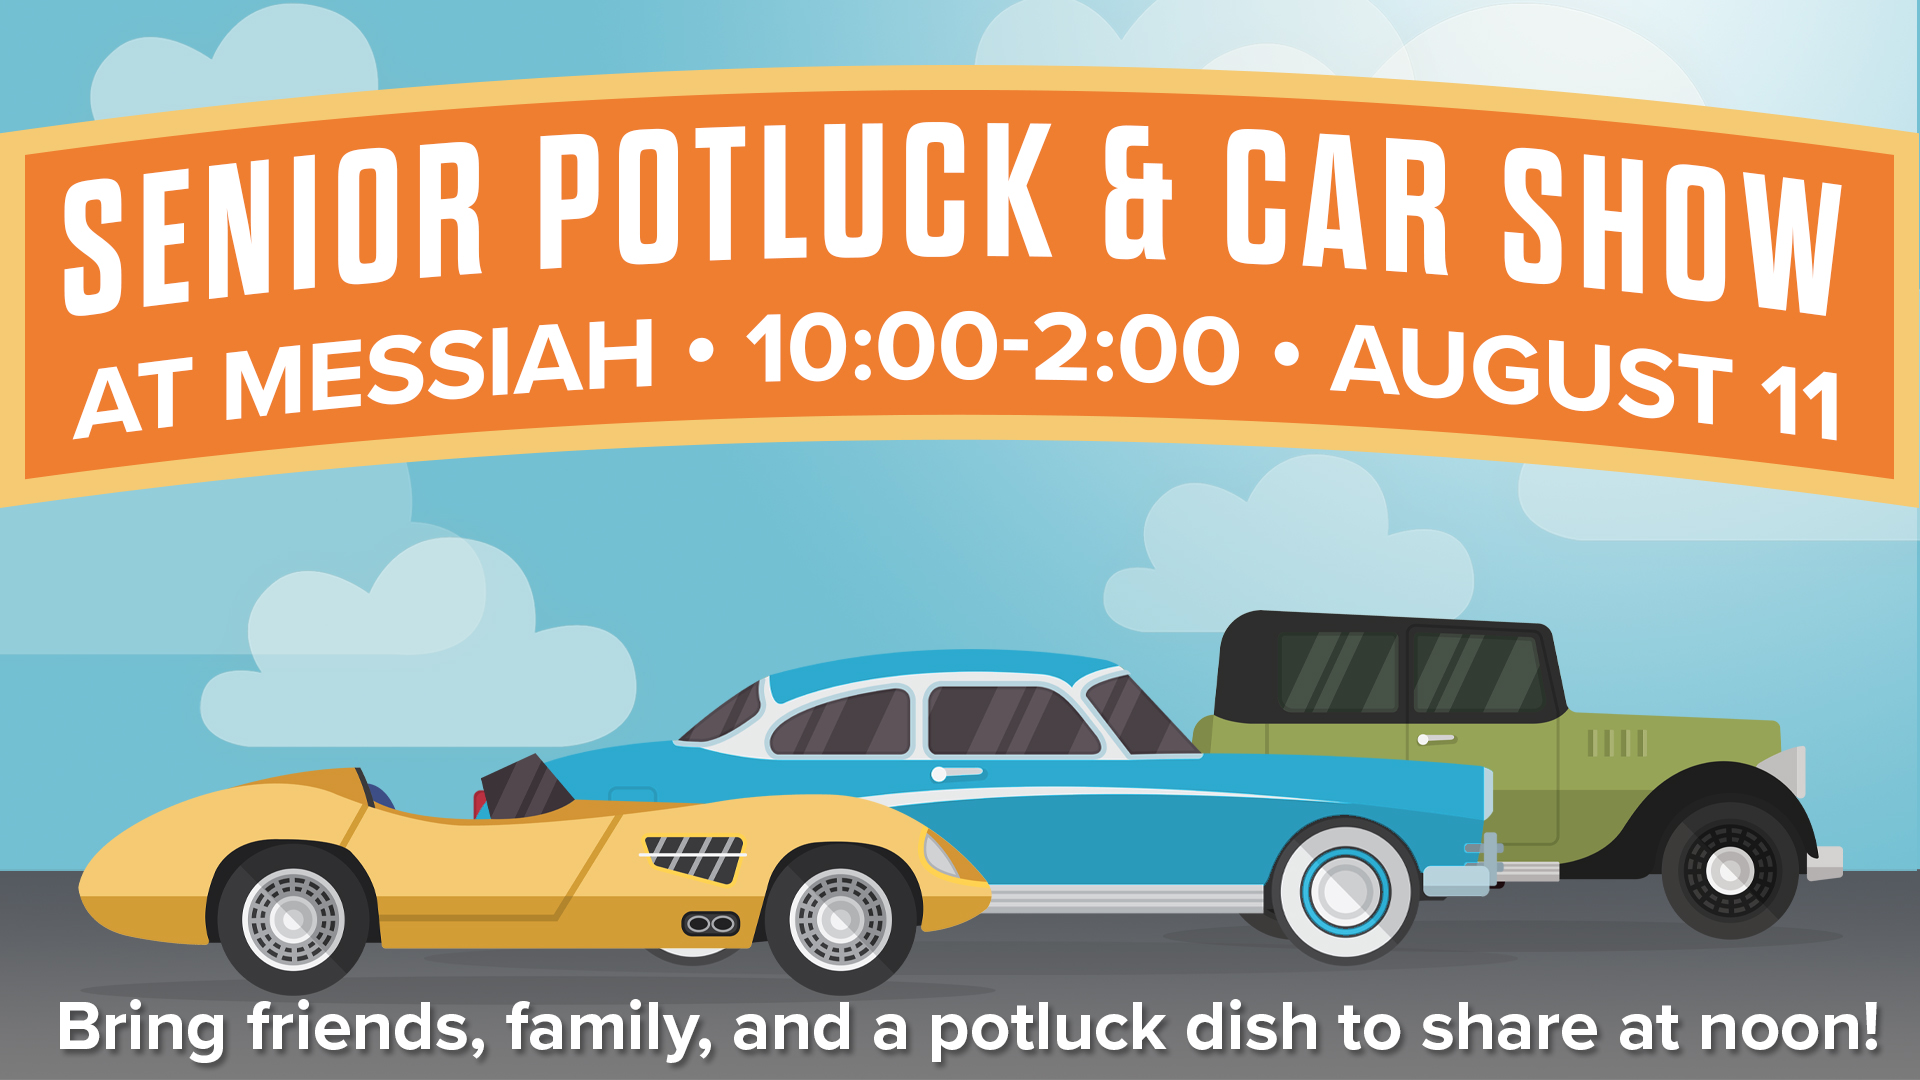 Senior Potluck and Car Show at Messiah August 11